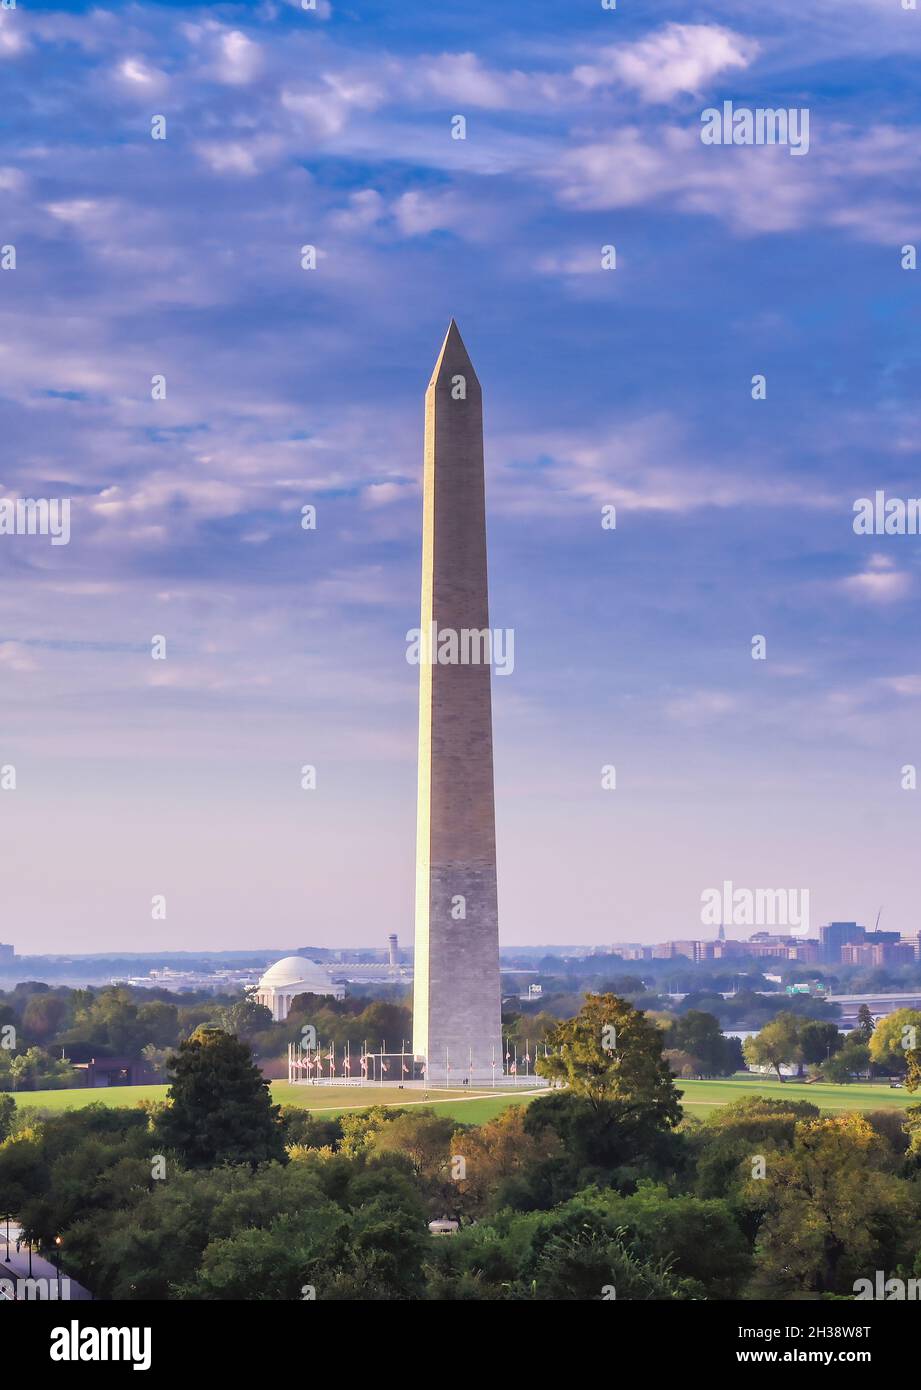 The Washington Monument on the National Mall in Washington, D.C. Stock Photo